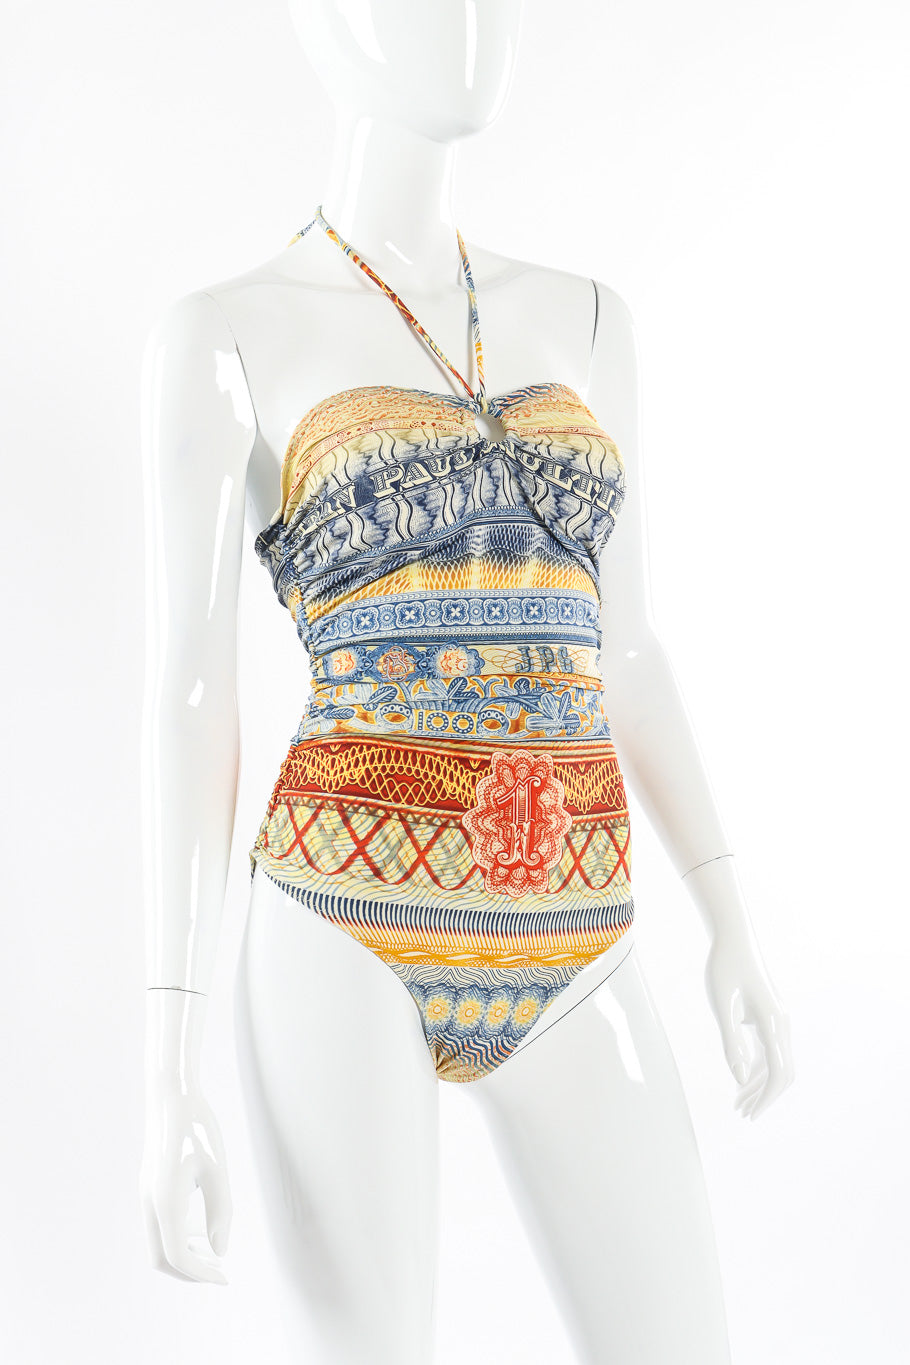 Swimsuit by Jean Paul Gaultier Soliel mannequin three quarter @recessla